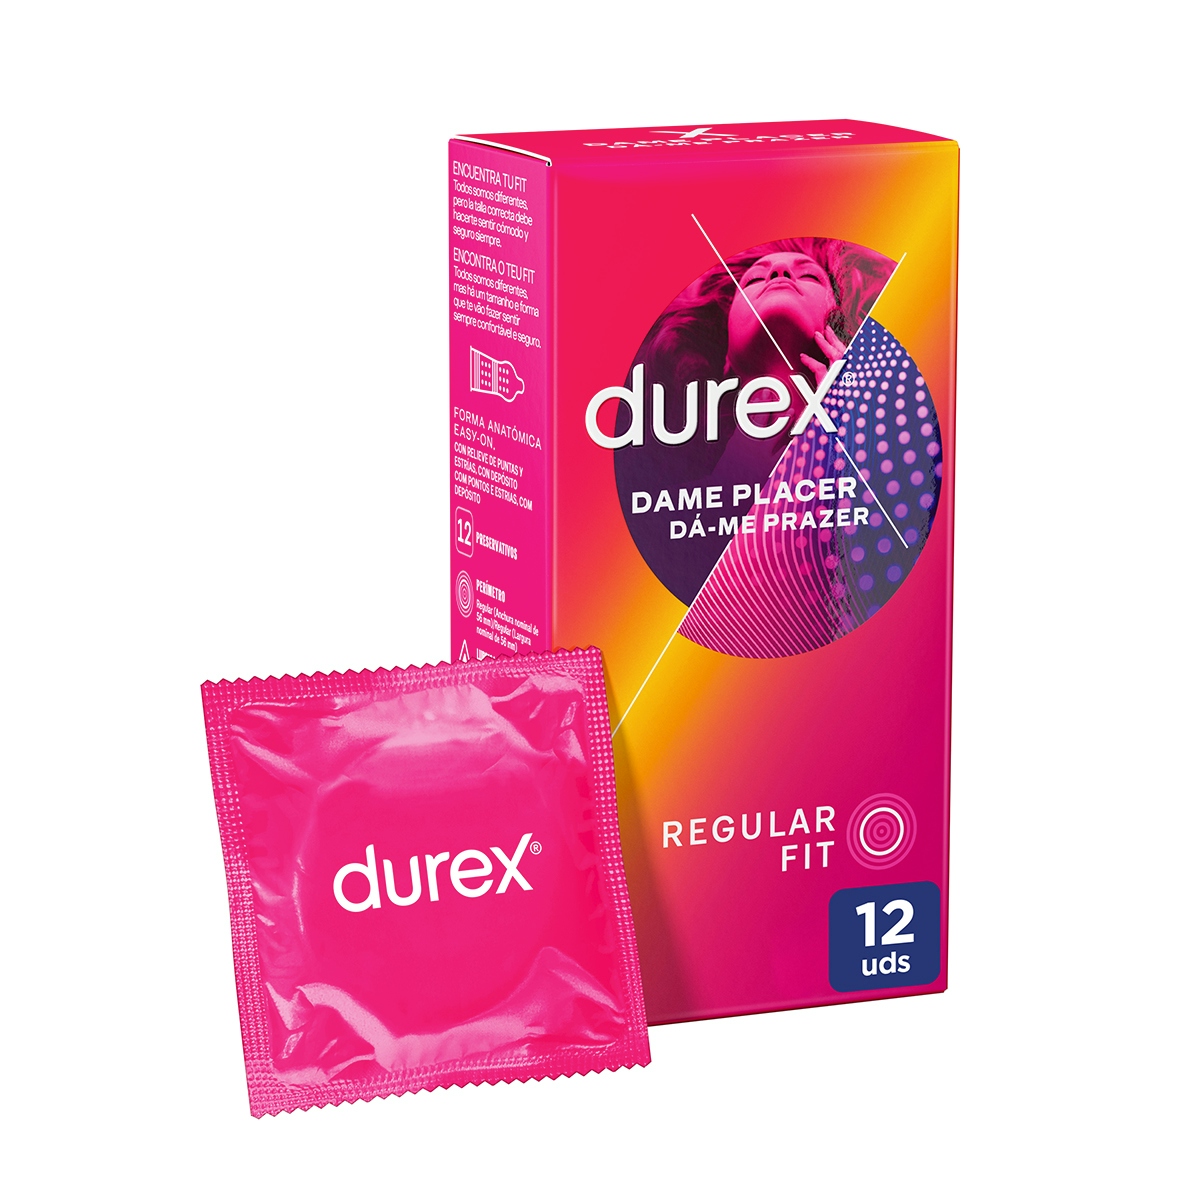 Preservativo dame placer DUREX 12 uds